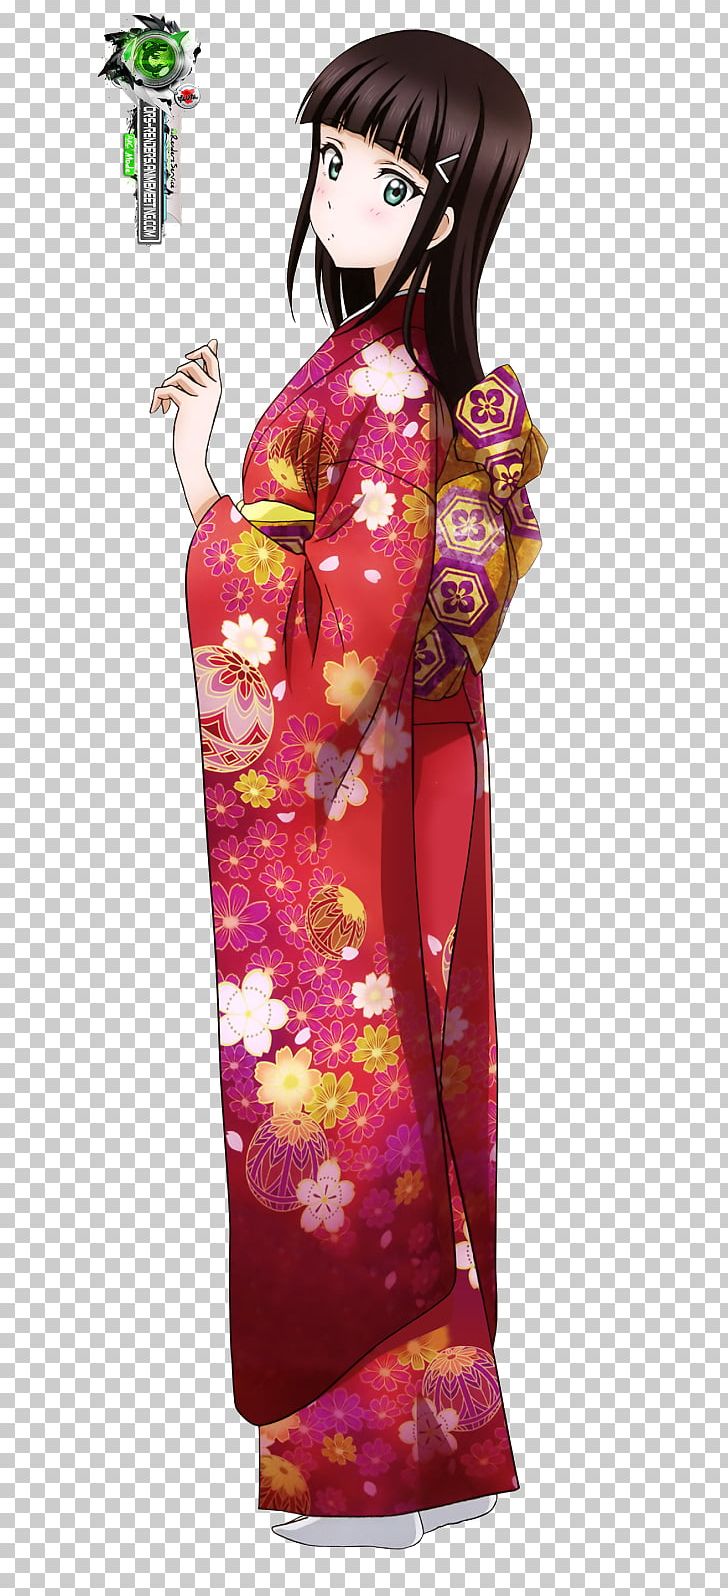 Kimono Clothing Dress Yukata Costume PNG, Clipart, Bathrobe, Clothing, Costume, Costume Design, Doll Free PNG Download